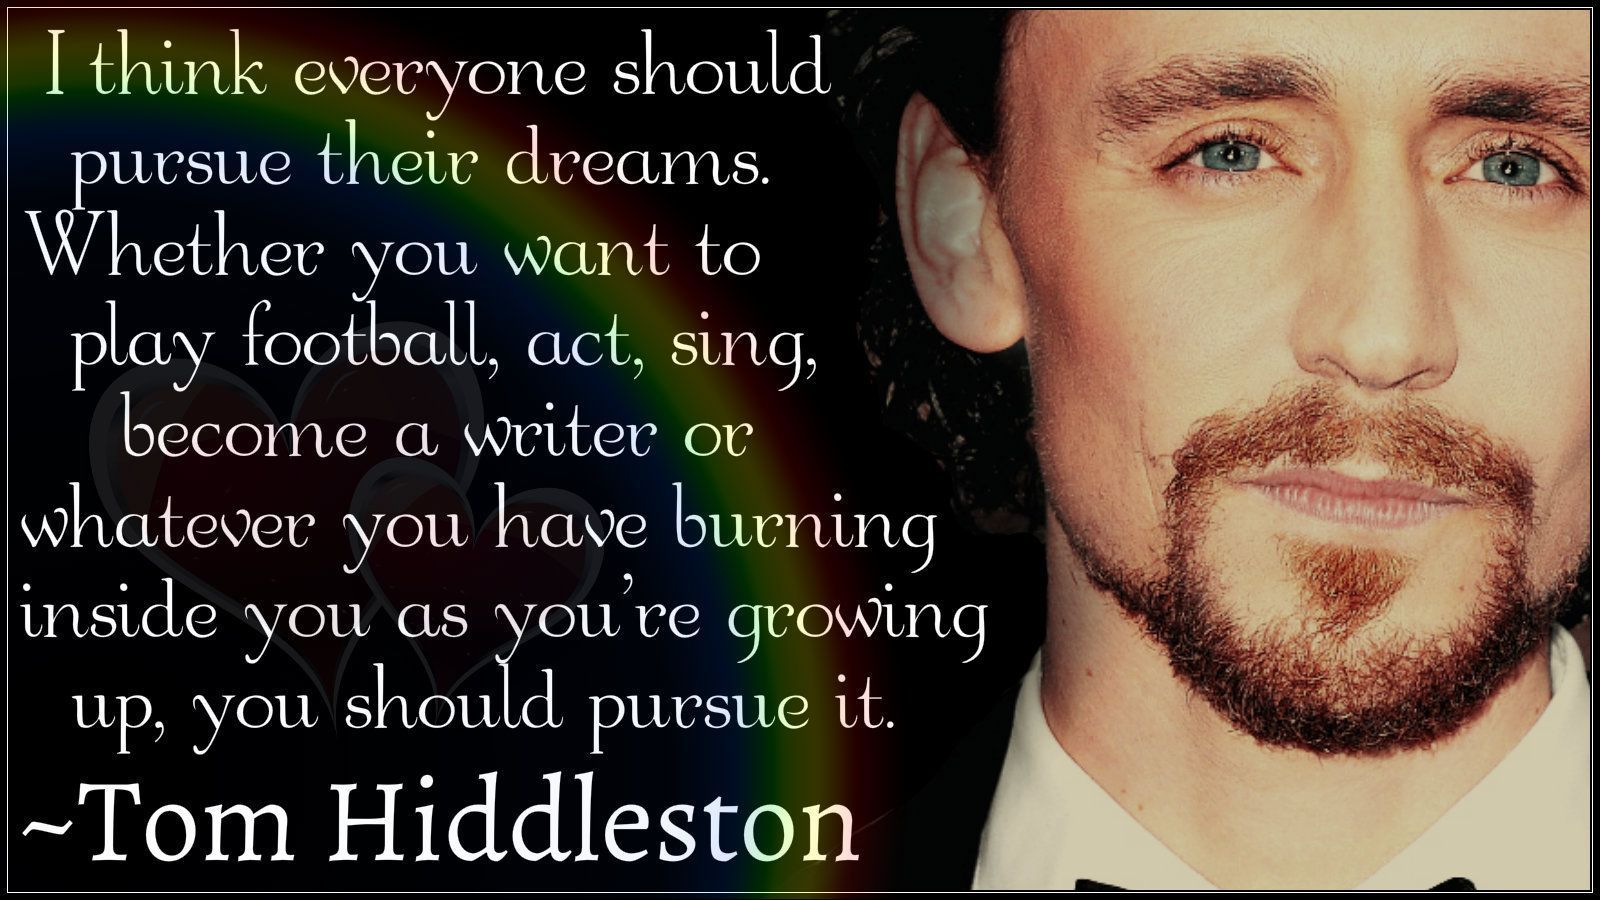 Tom Hiddleston - Tom Hiddleston Wallpaper (36941895) - Fanpop